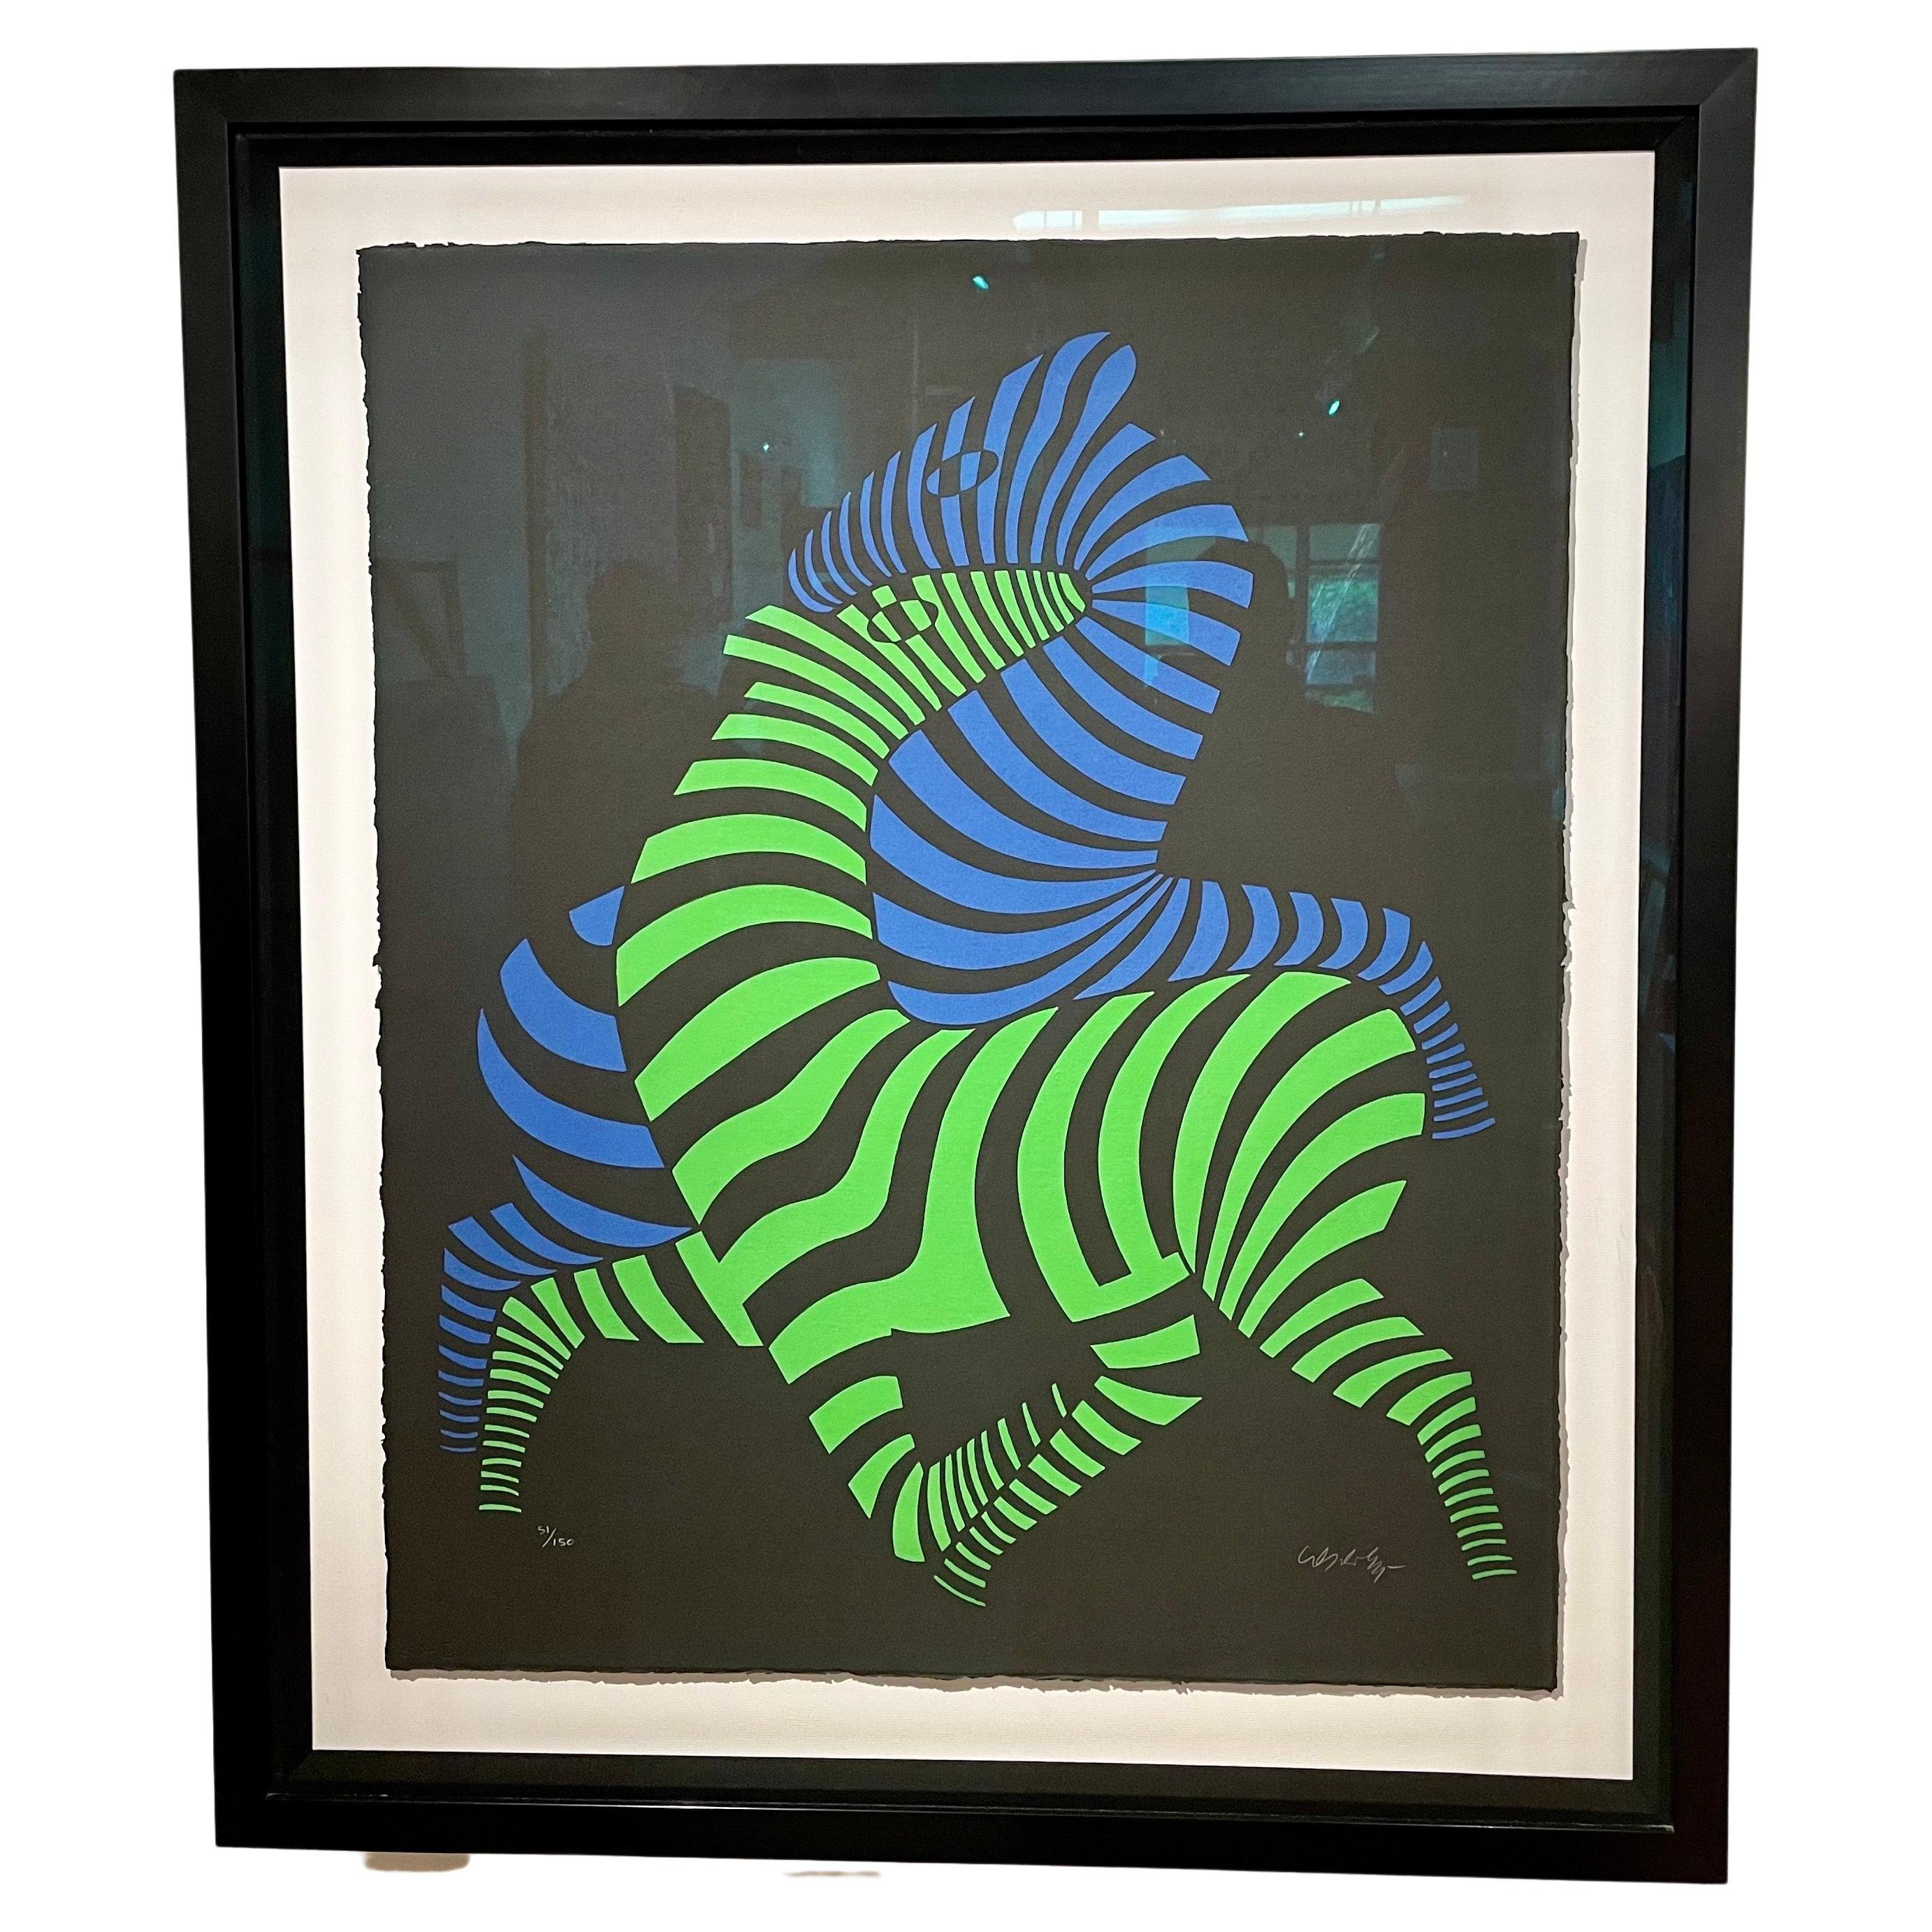 X Large Freshly Framed Zebras Serigraph Signed & Numbered by Victor Vasarely